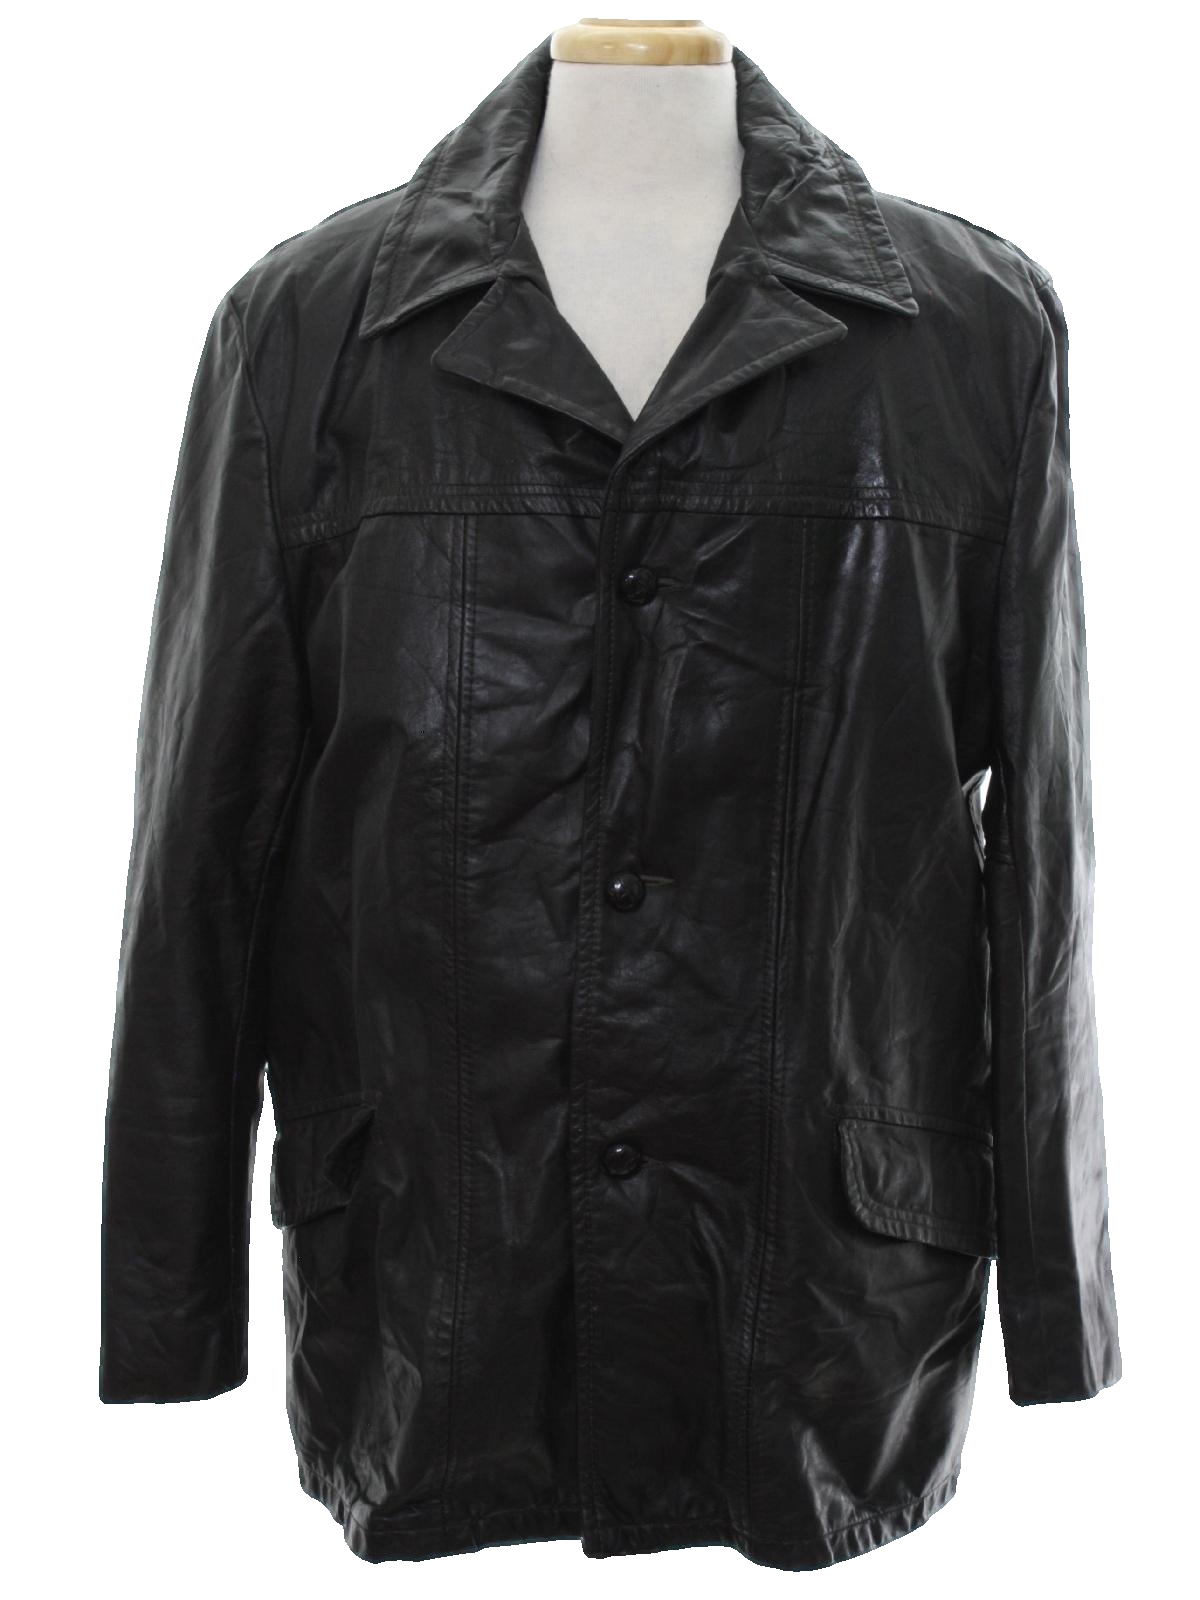 Retro 1970's Leather Jacket (Genuine Leather) : 70s -Genuine Leather ...